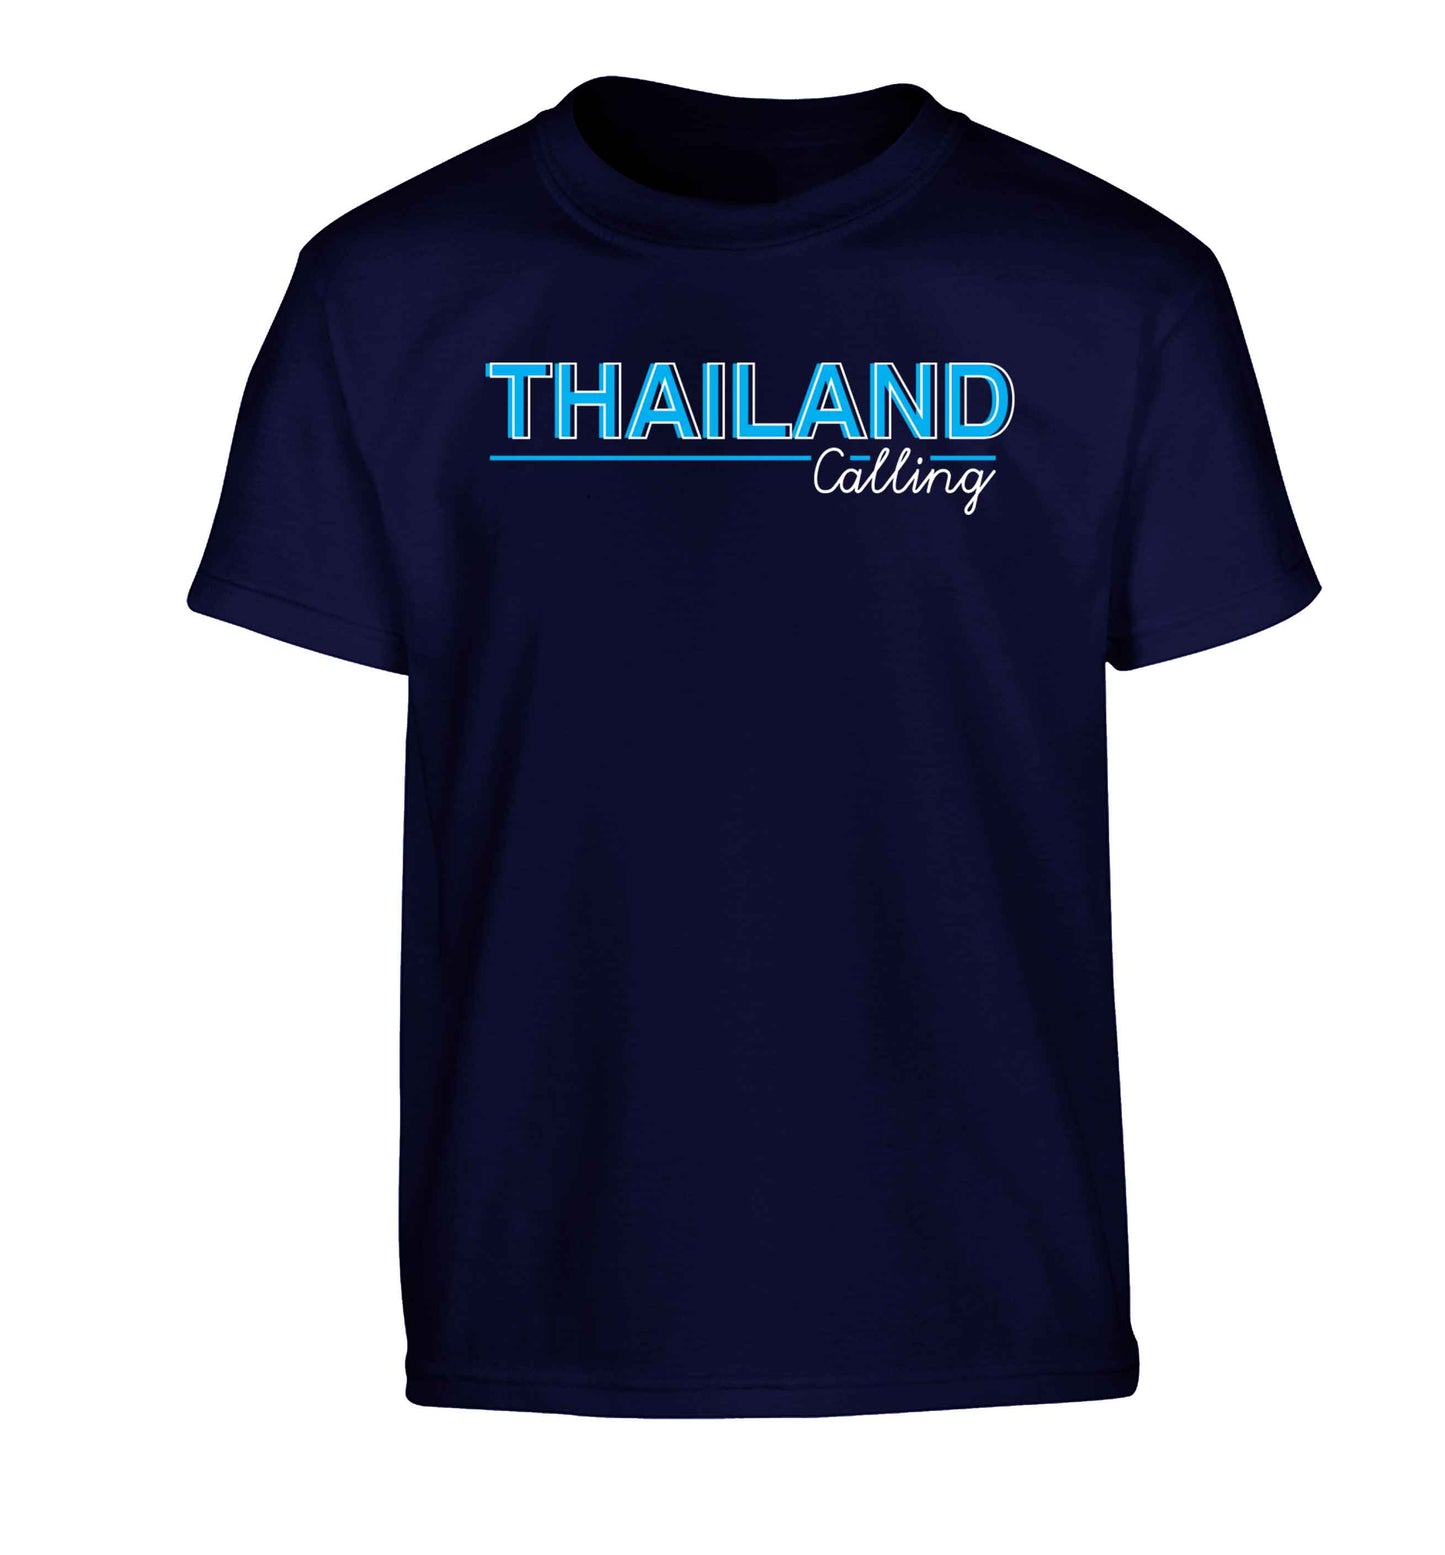 Thailand calling Children's navy Tshirt 12-13 Years